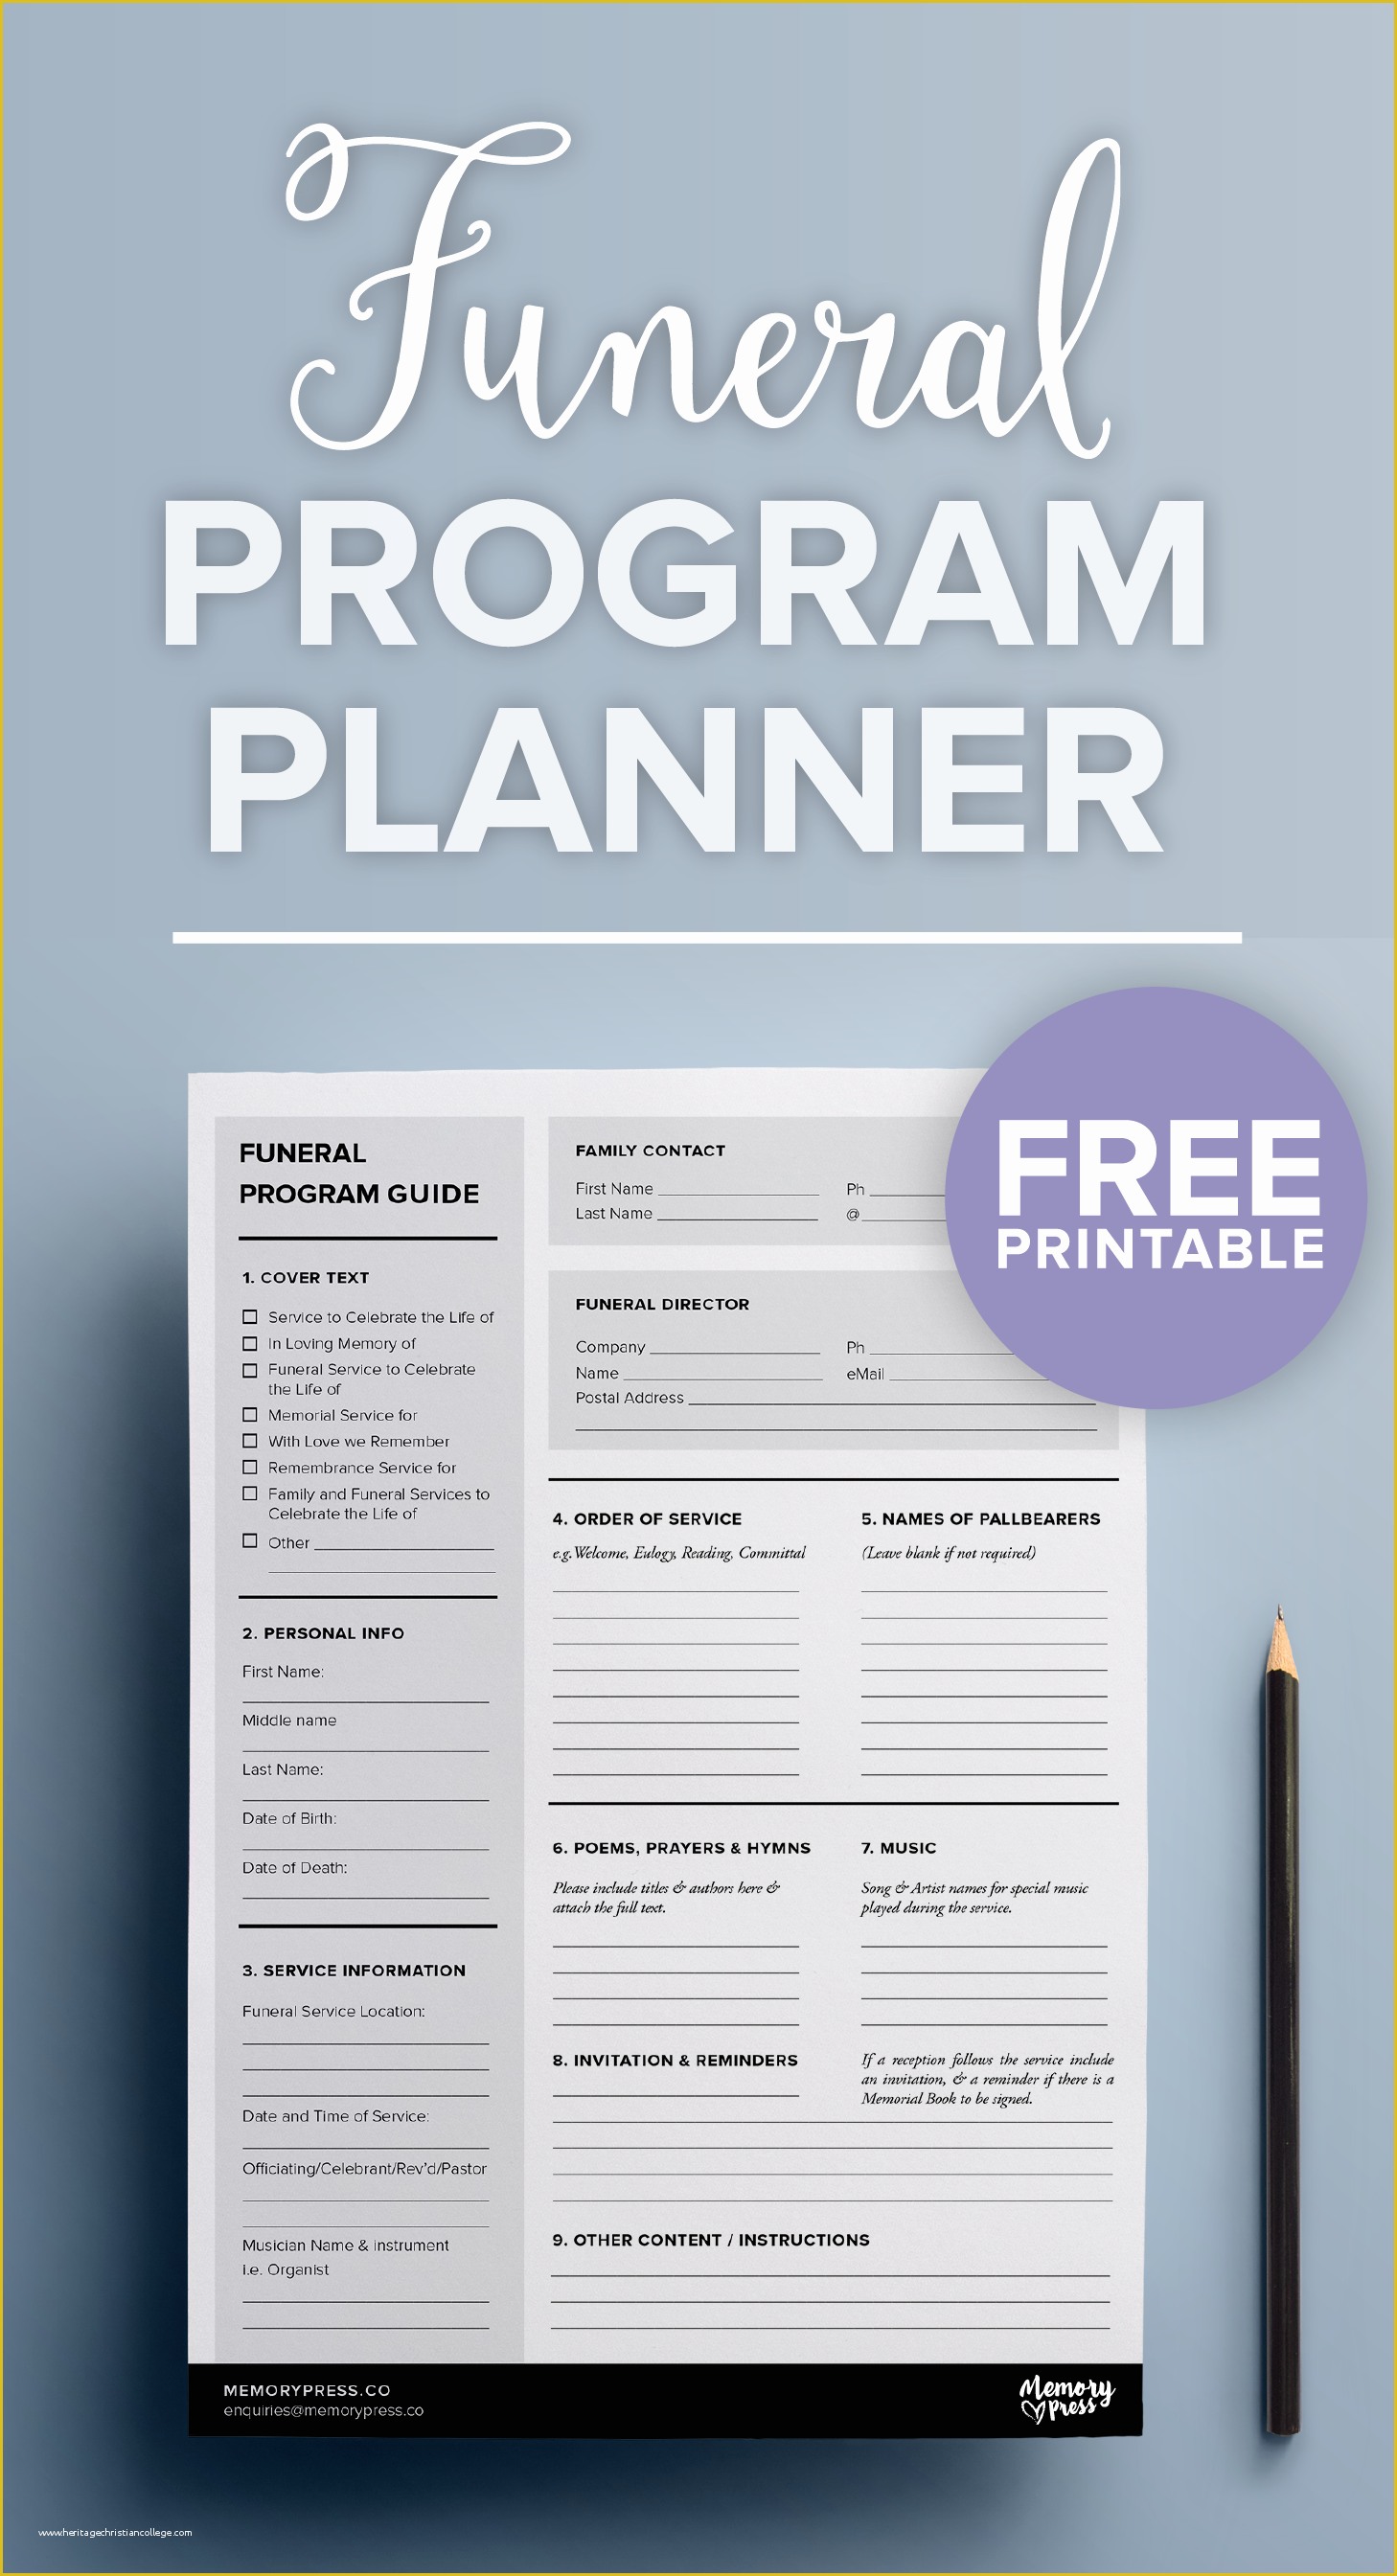 Memorial Service Template Free Of Free Printable Funeral Program Planner